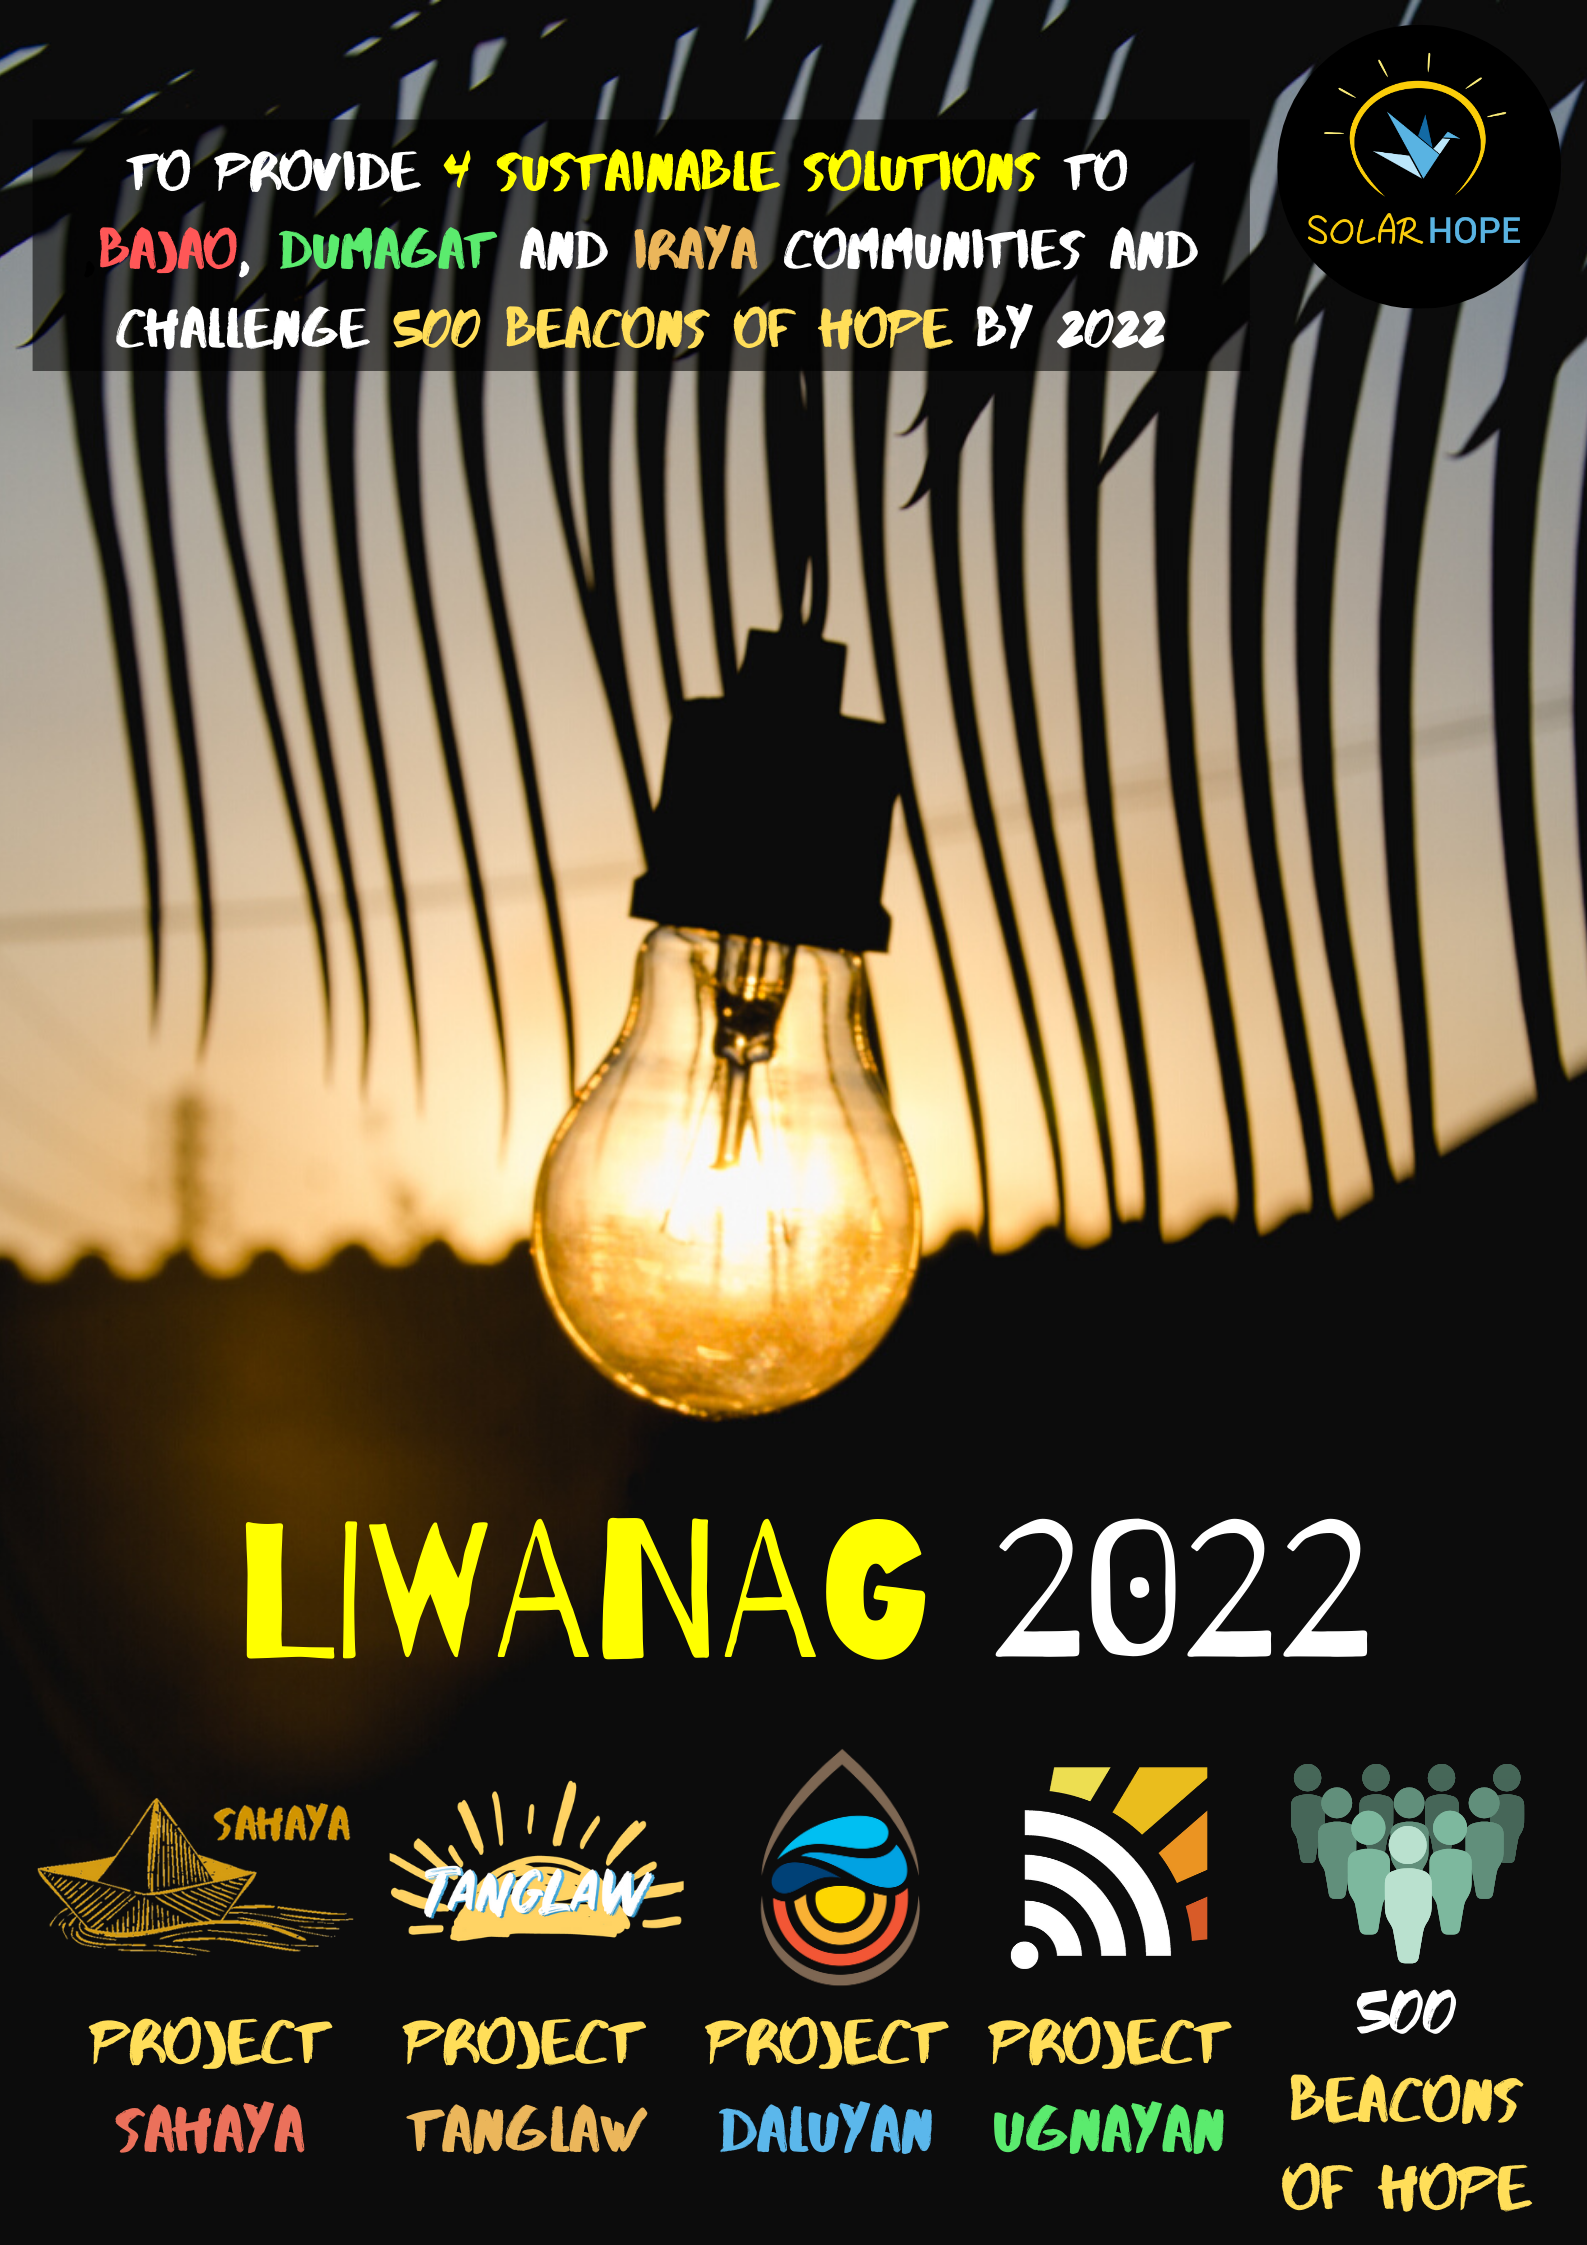 Launching of Liwanag 2022